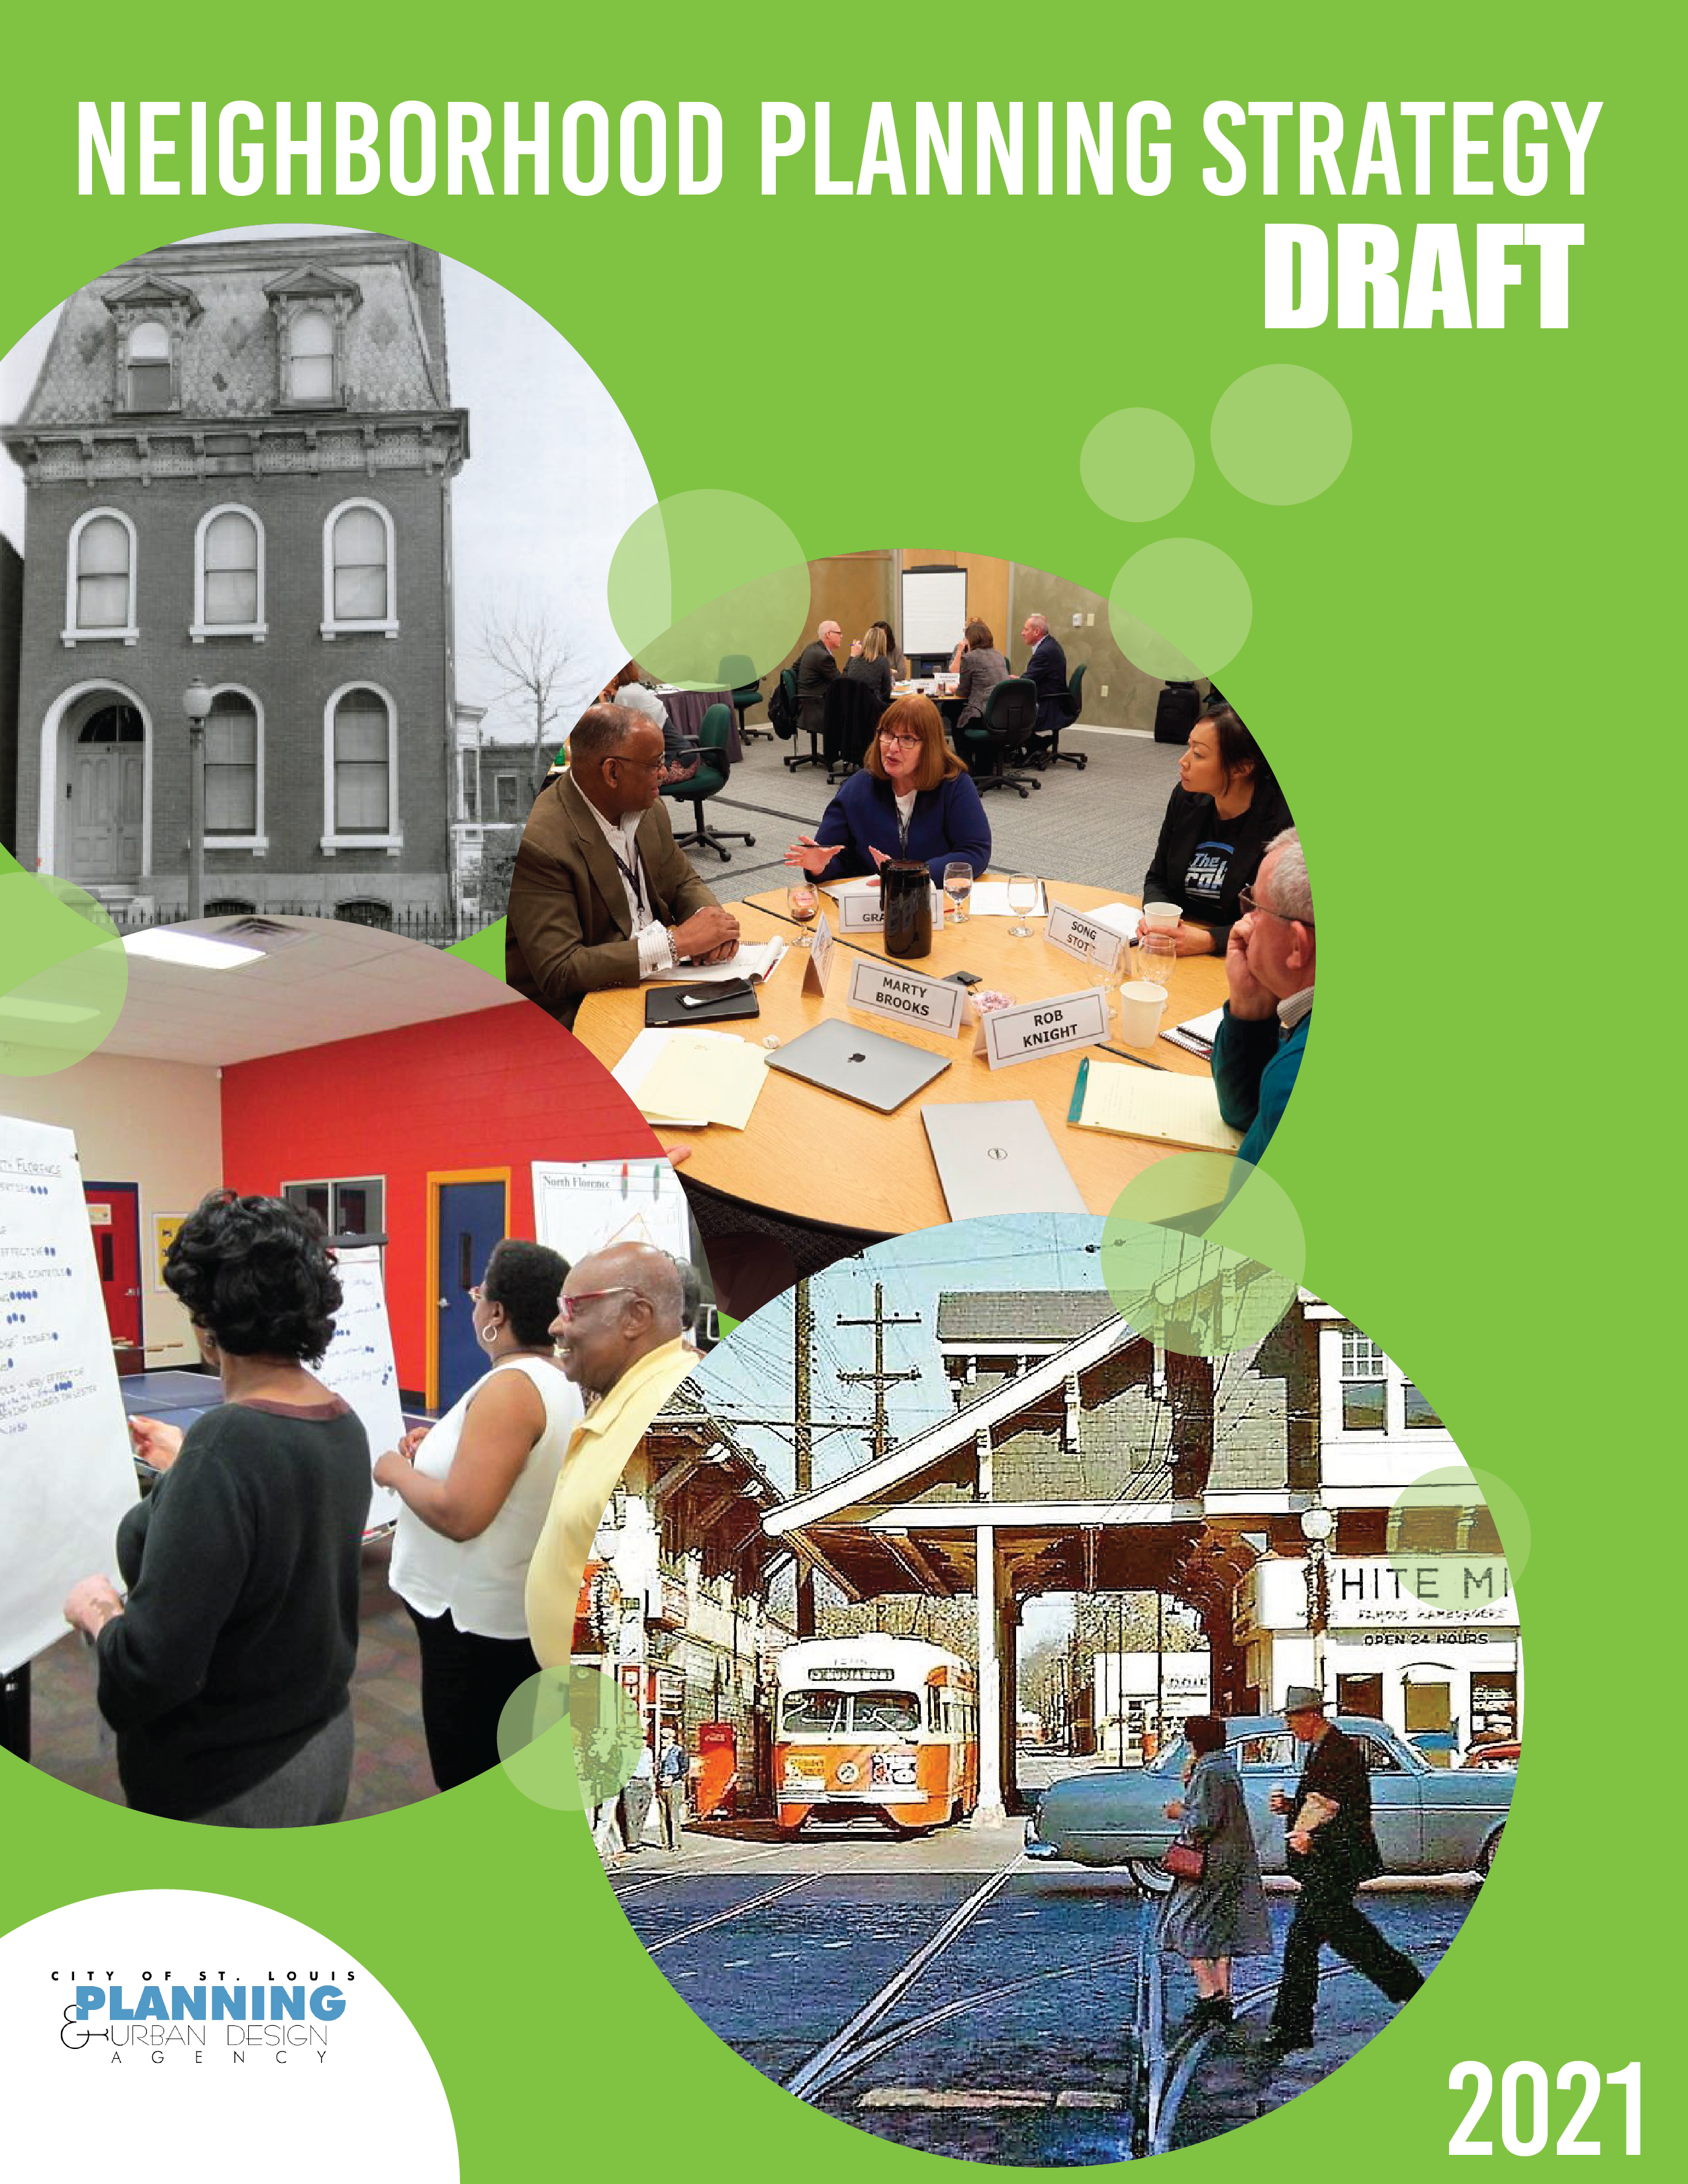 Draft Neighborhood Planning Strategy Cover 2021